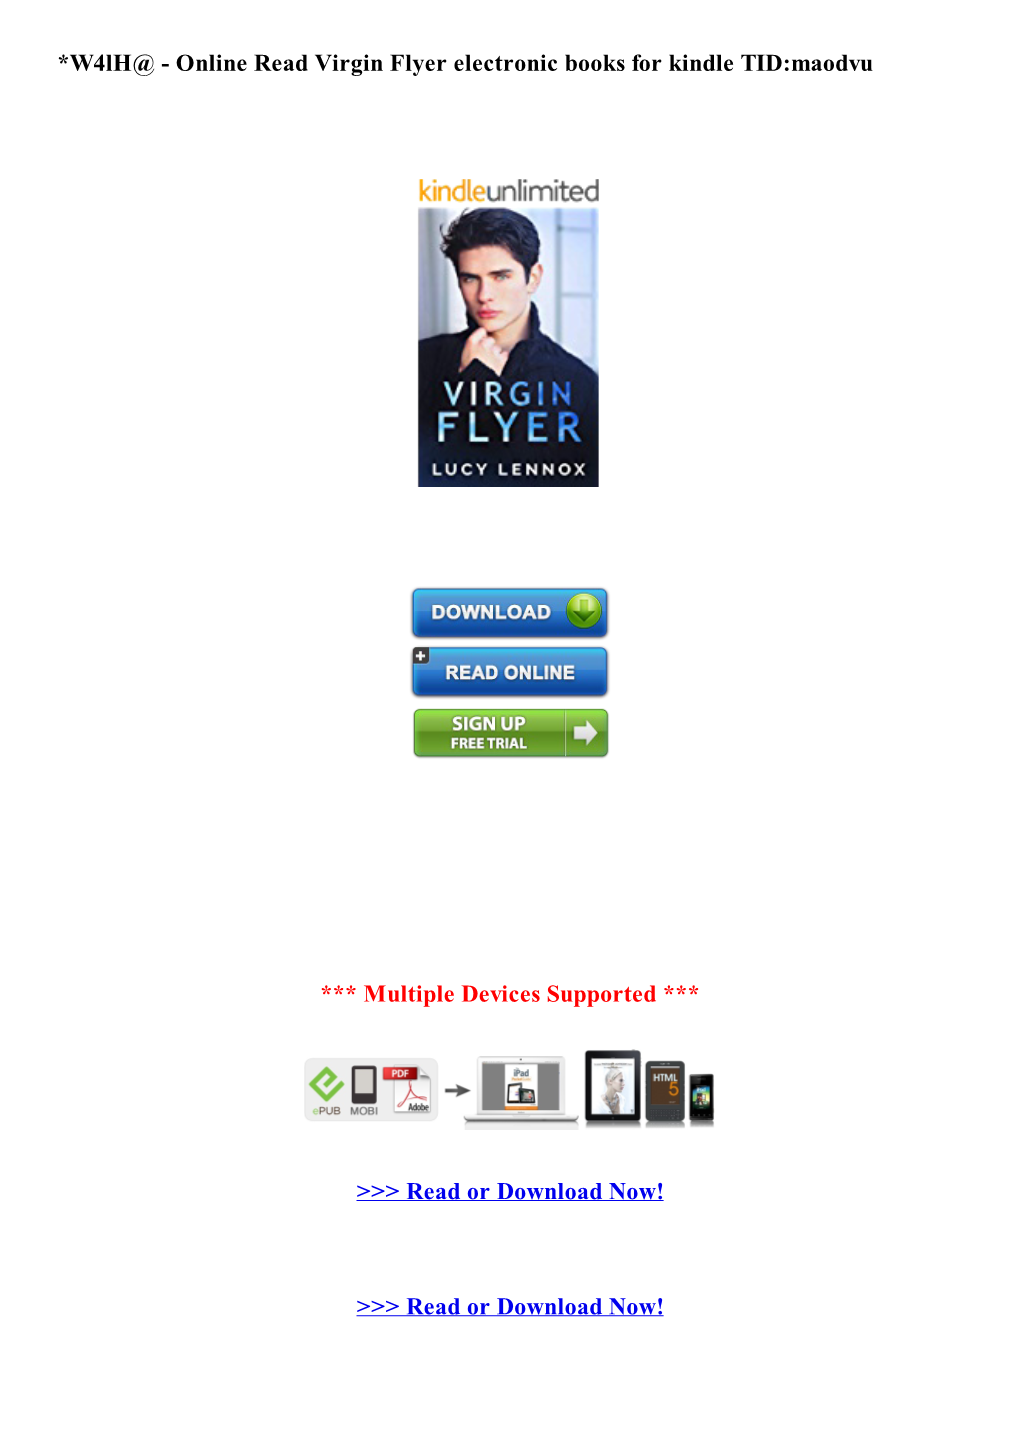 Online Read Virgin Flyer Electronic Books for Kindle TID:Maodvu